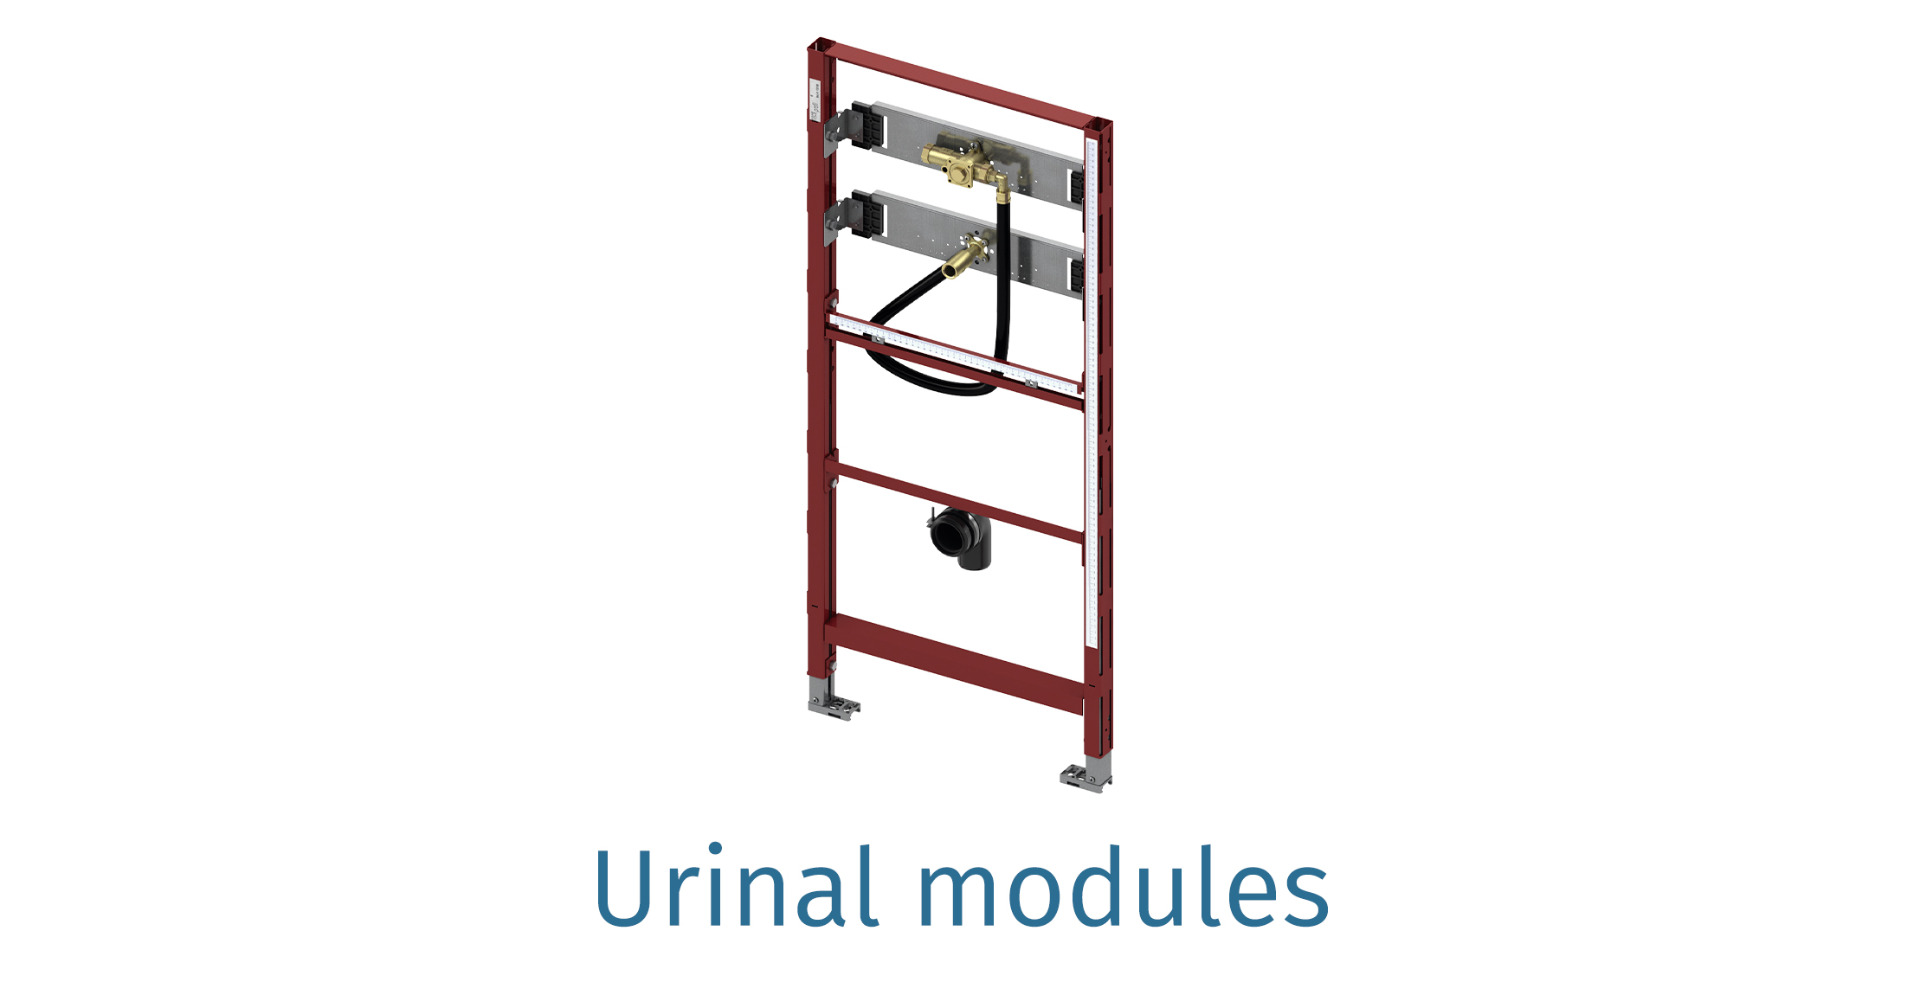 Urinal modules